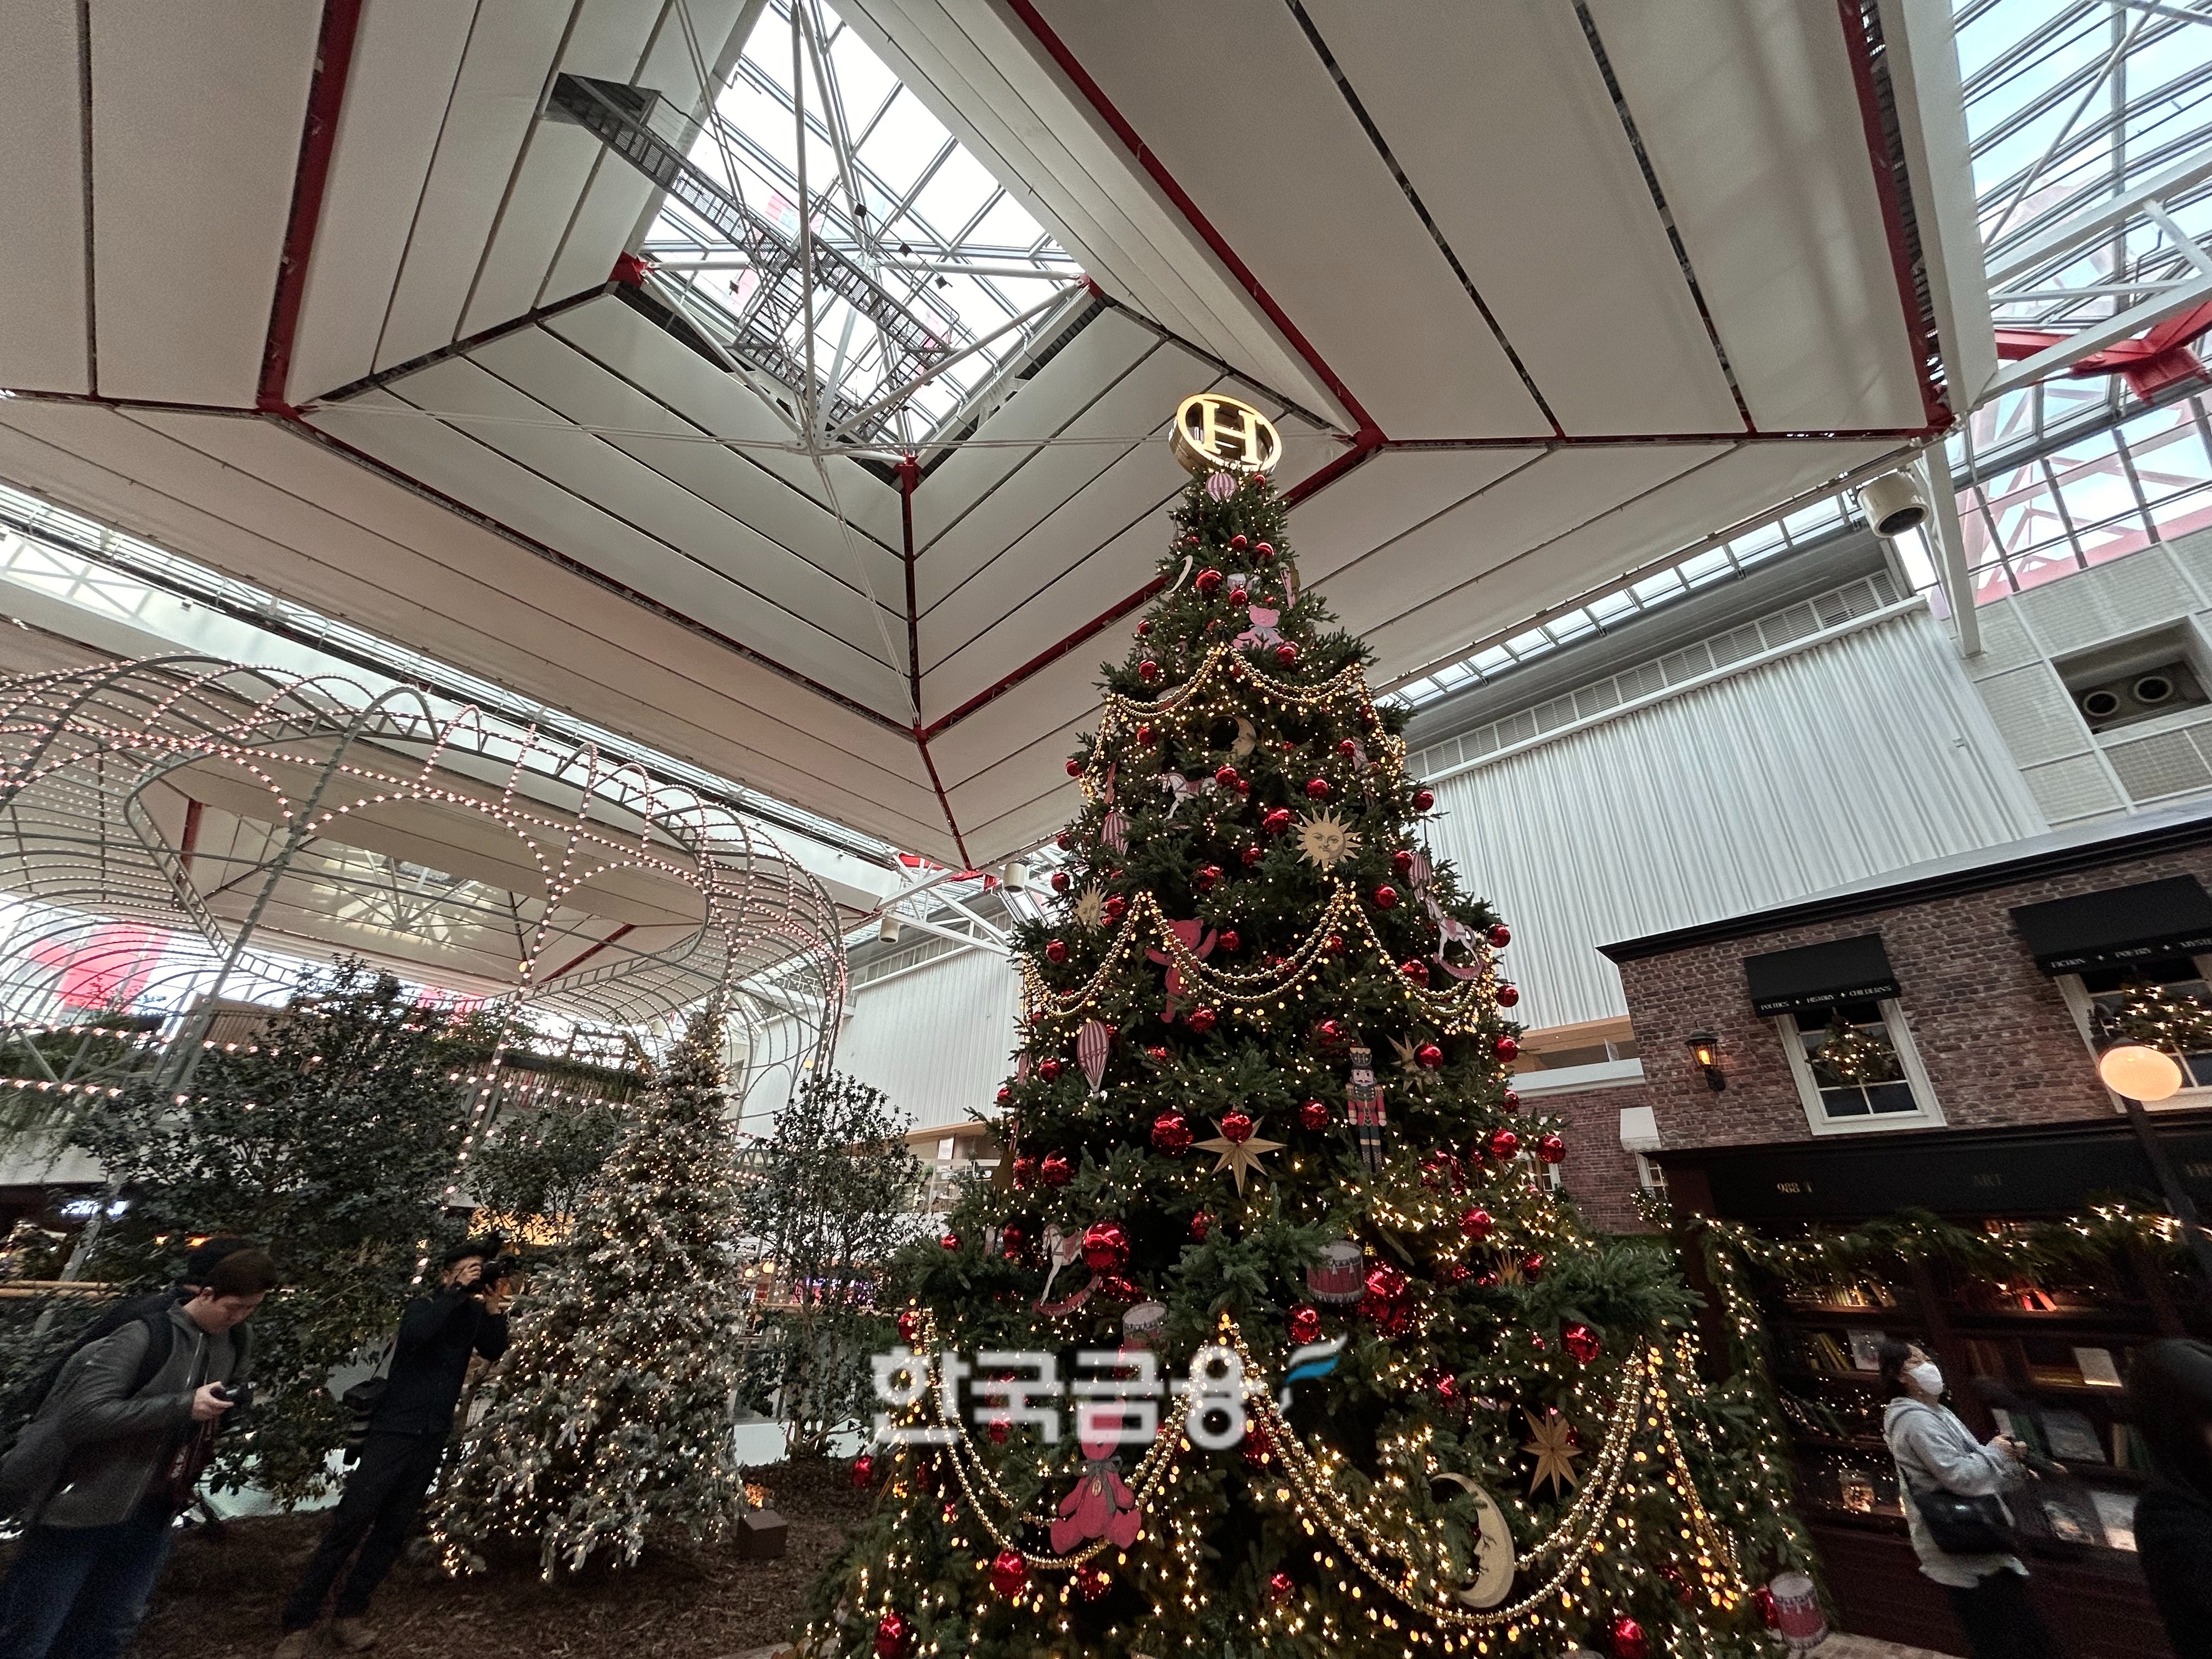 11M 높이의 대형 크리스마스 트리로, 인증샷을 찍기 위해 많은 사람들이 모여들었다. /사진=박슬기 기자 